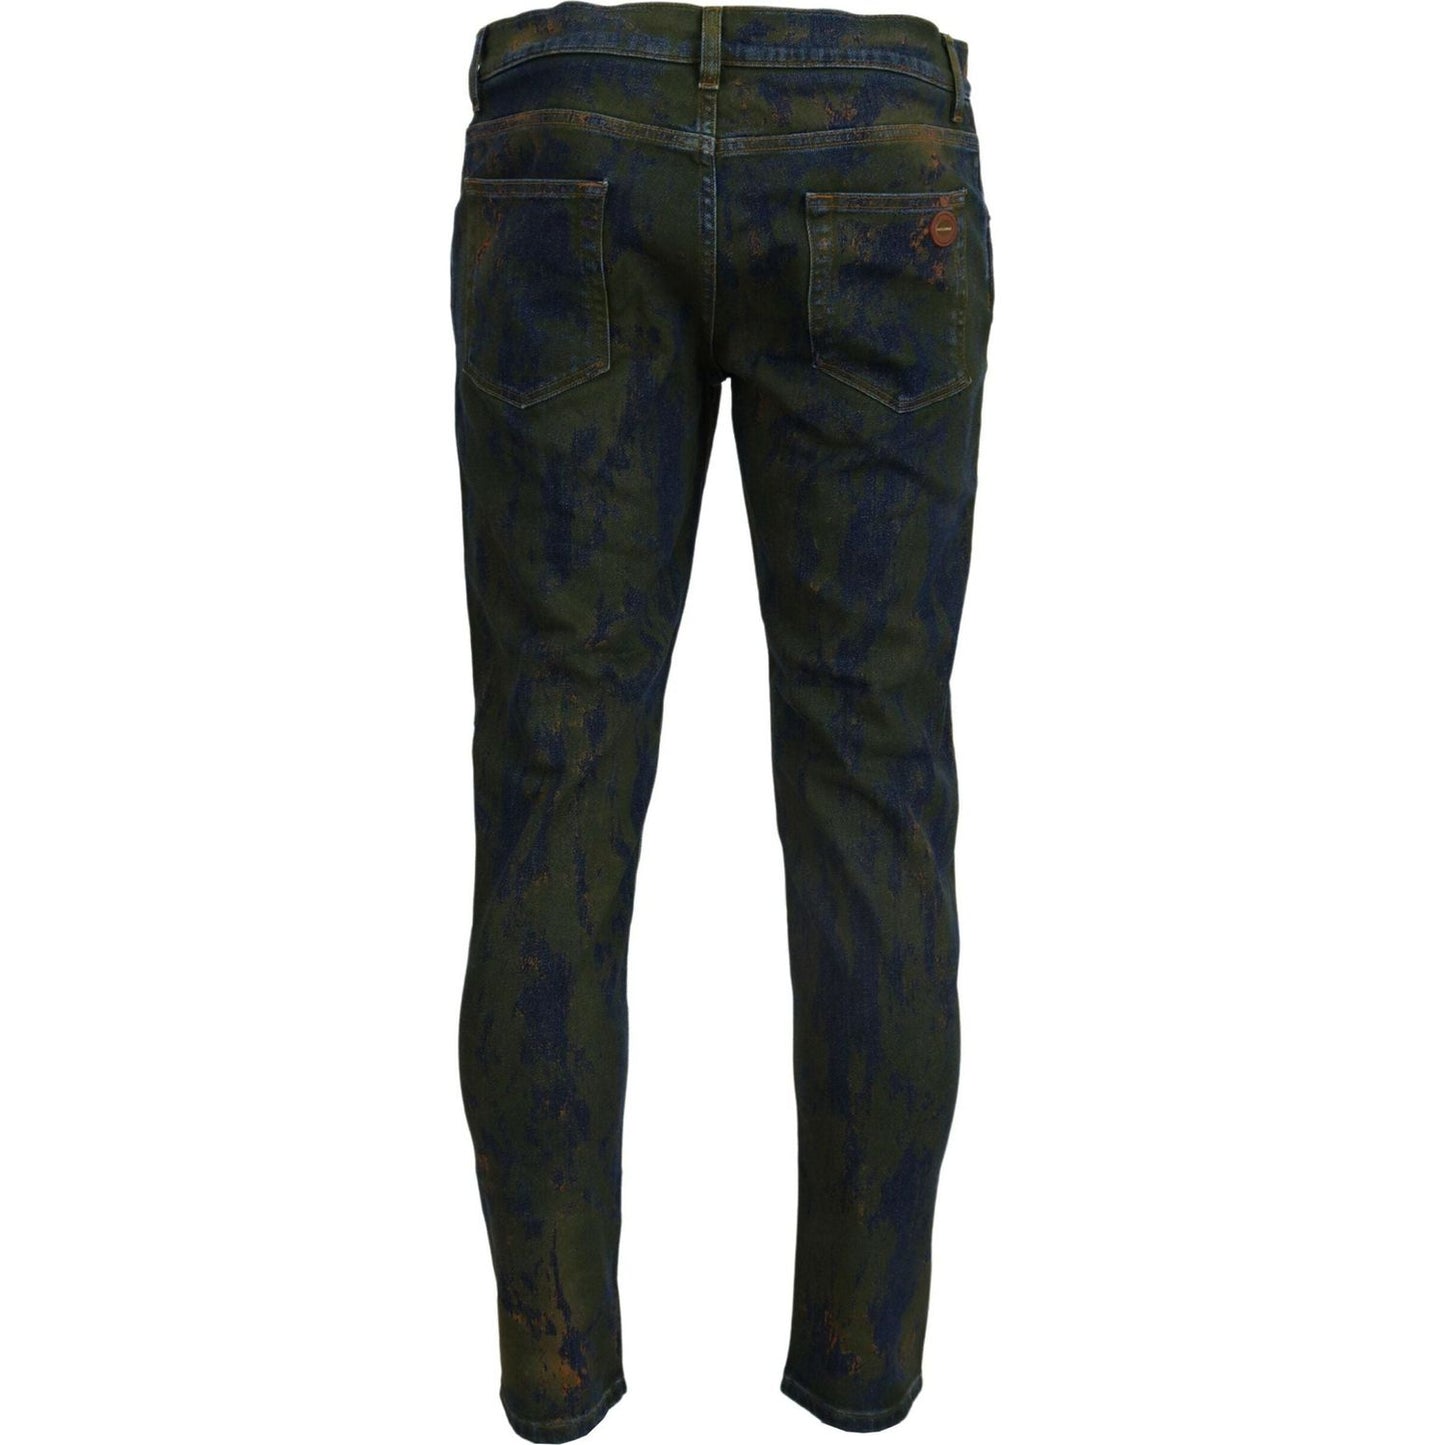 Dolce & Gabbana Chic Slim-Fit Denim Jeans in Green Wash blue-green-skinny-cotton-denim-jeans IMG_6833-scaled-964afe36-f25.jpg